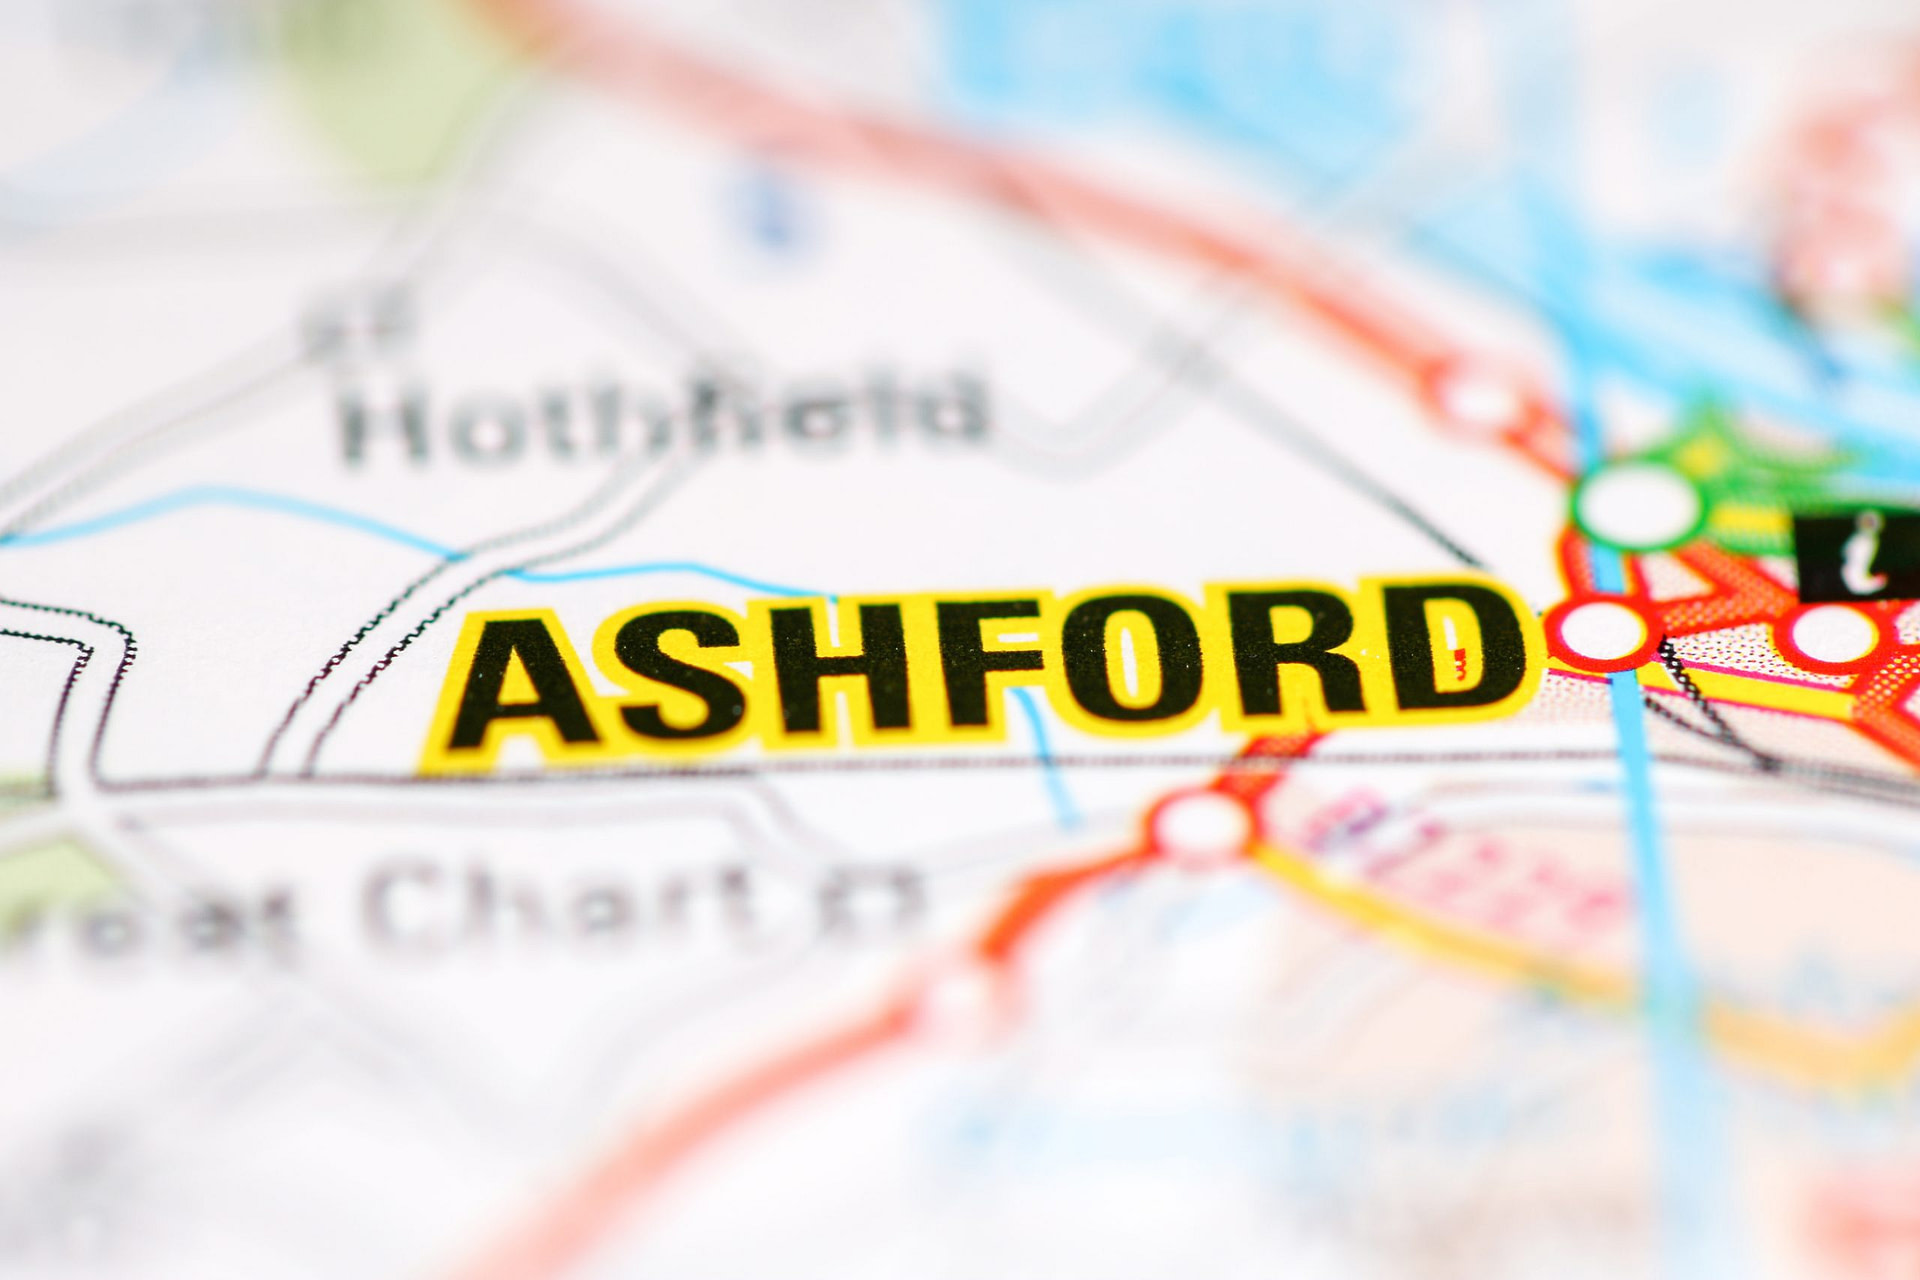 Ashford Designer Outlet opens 90 million pound extension